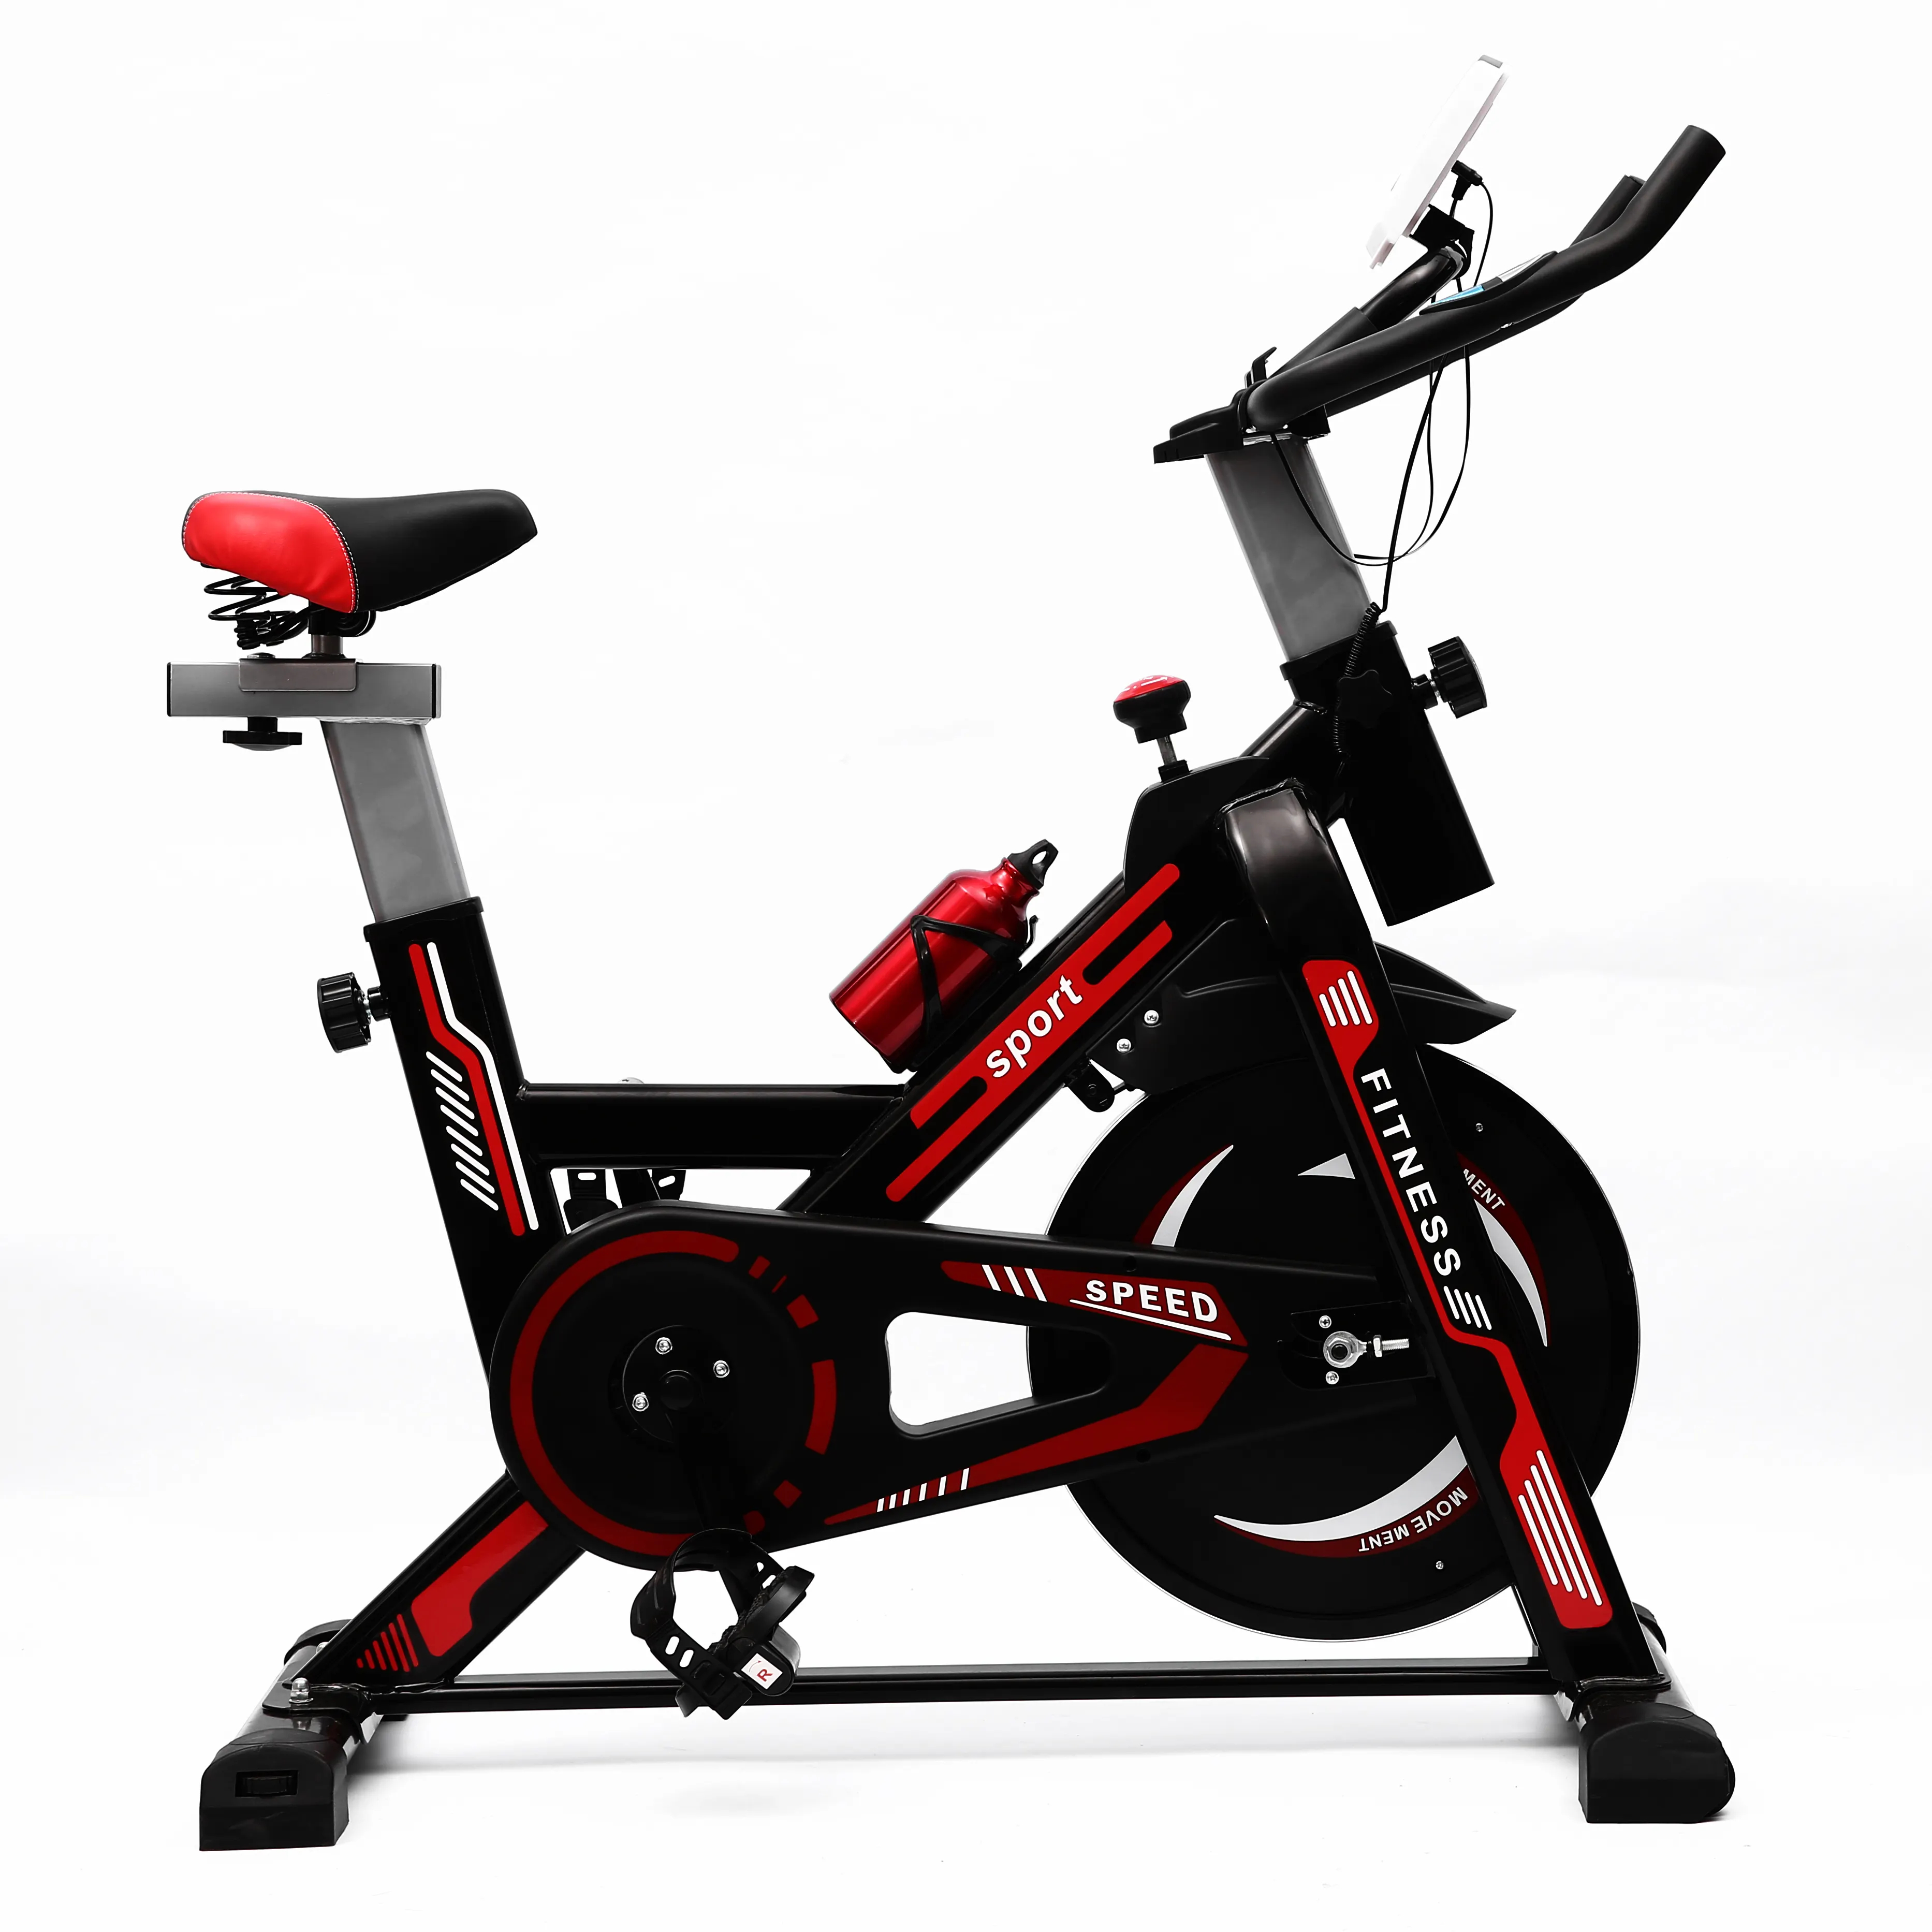 Luckystar Sports home exercise machine fitness equipment indoor stationary spinning bike gym machines spinning bikes